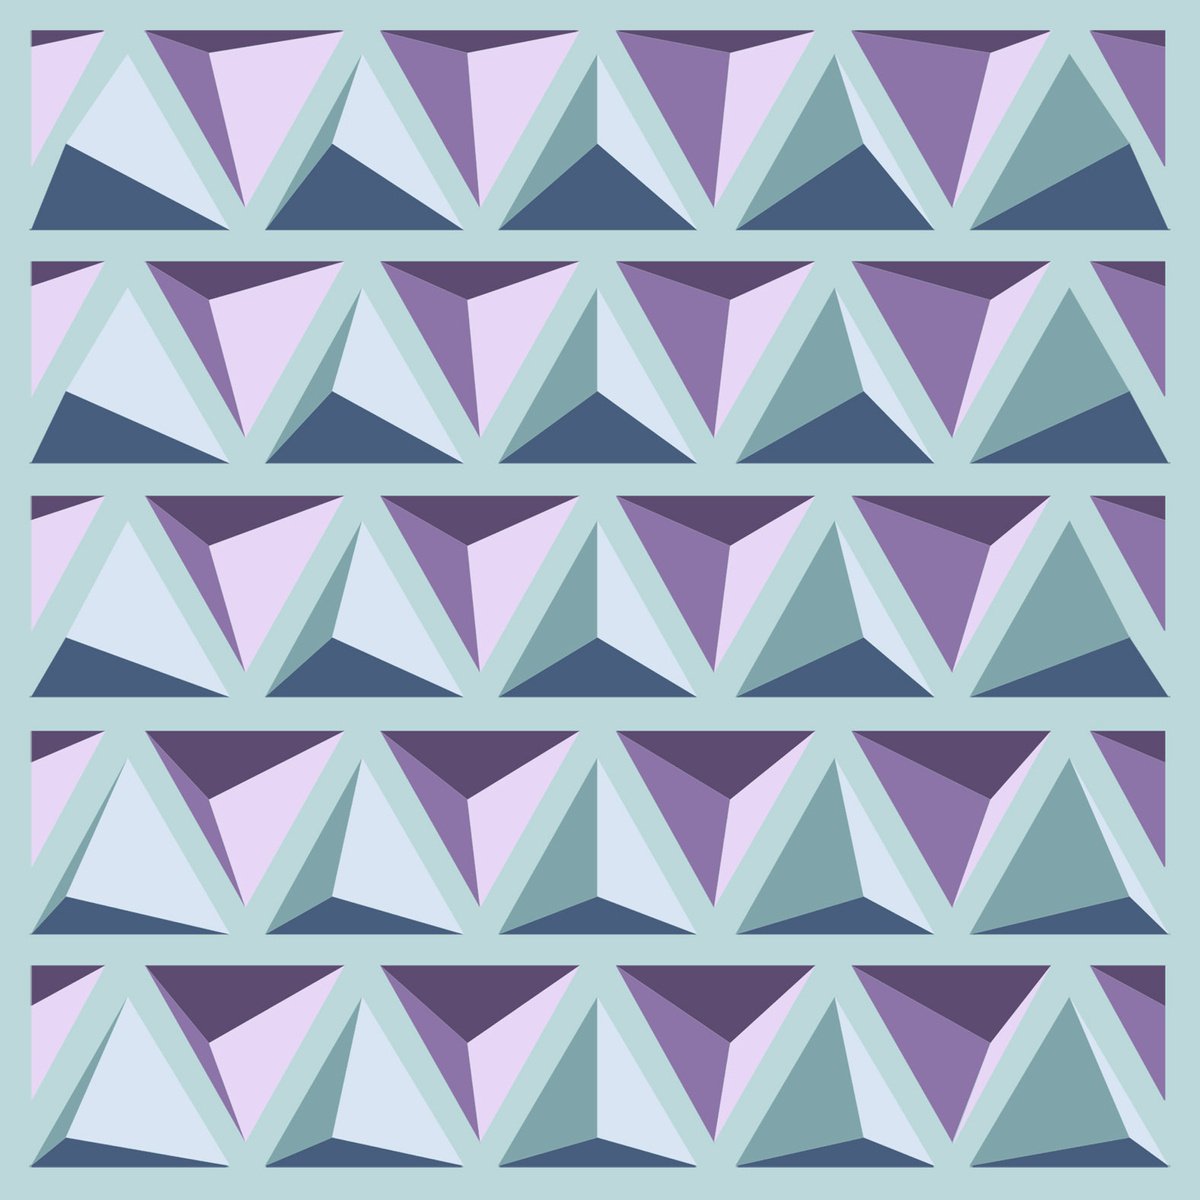 Triangulation No.2 by Crispin Holder